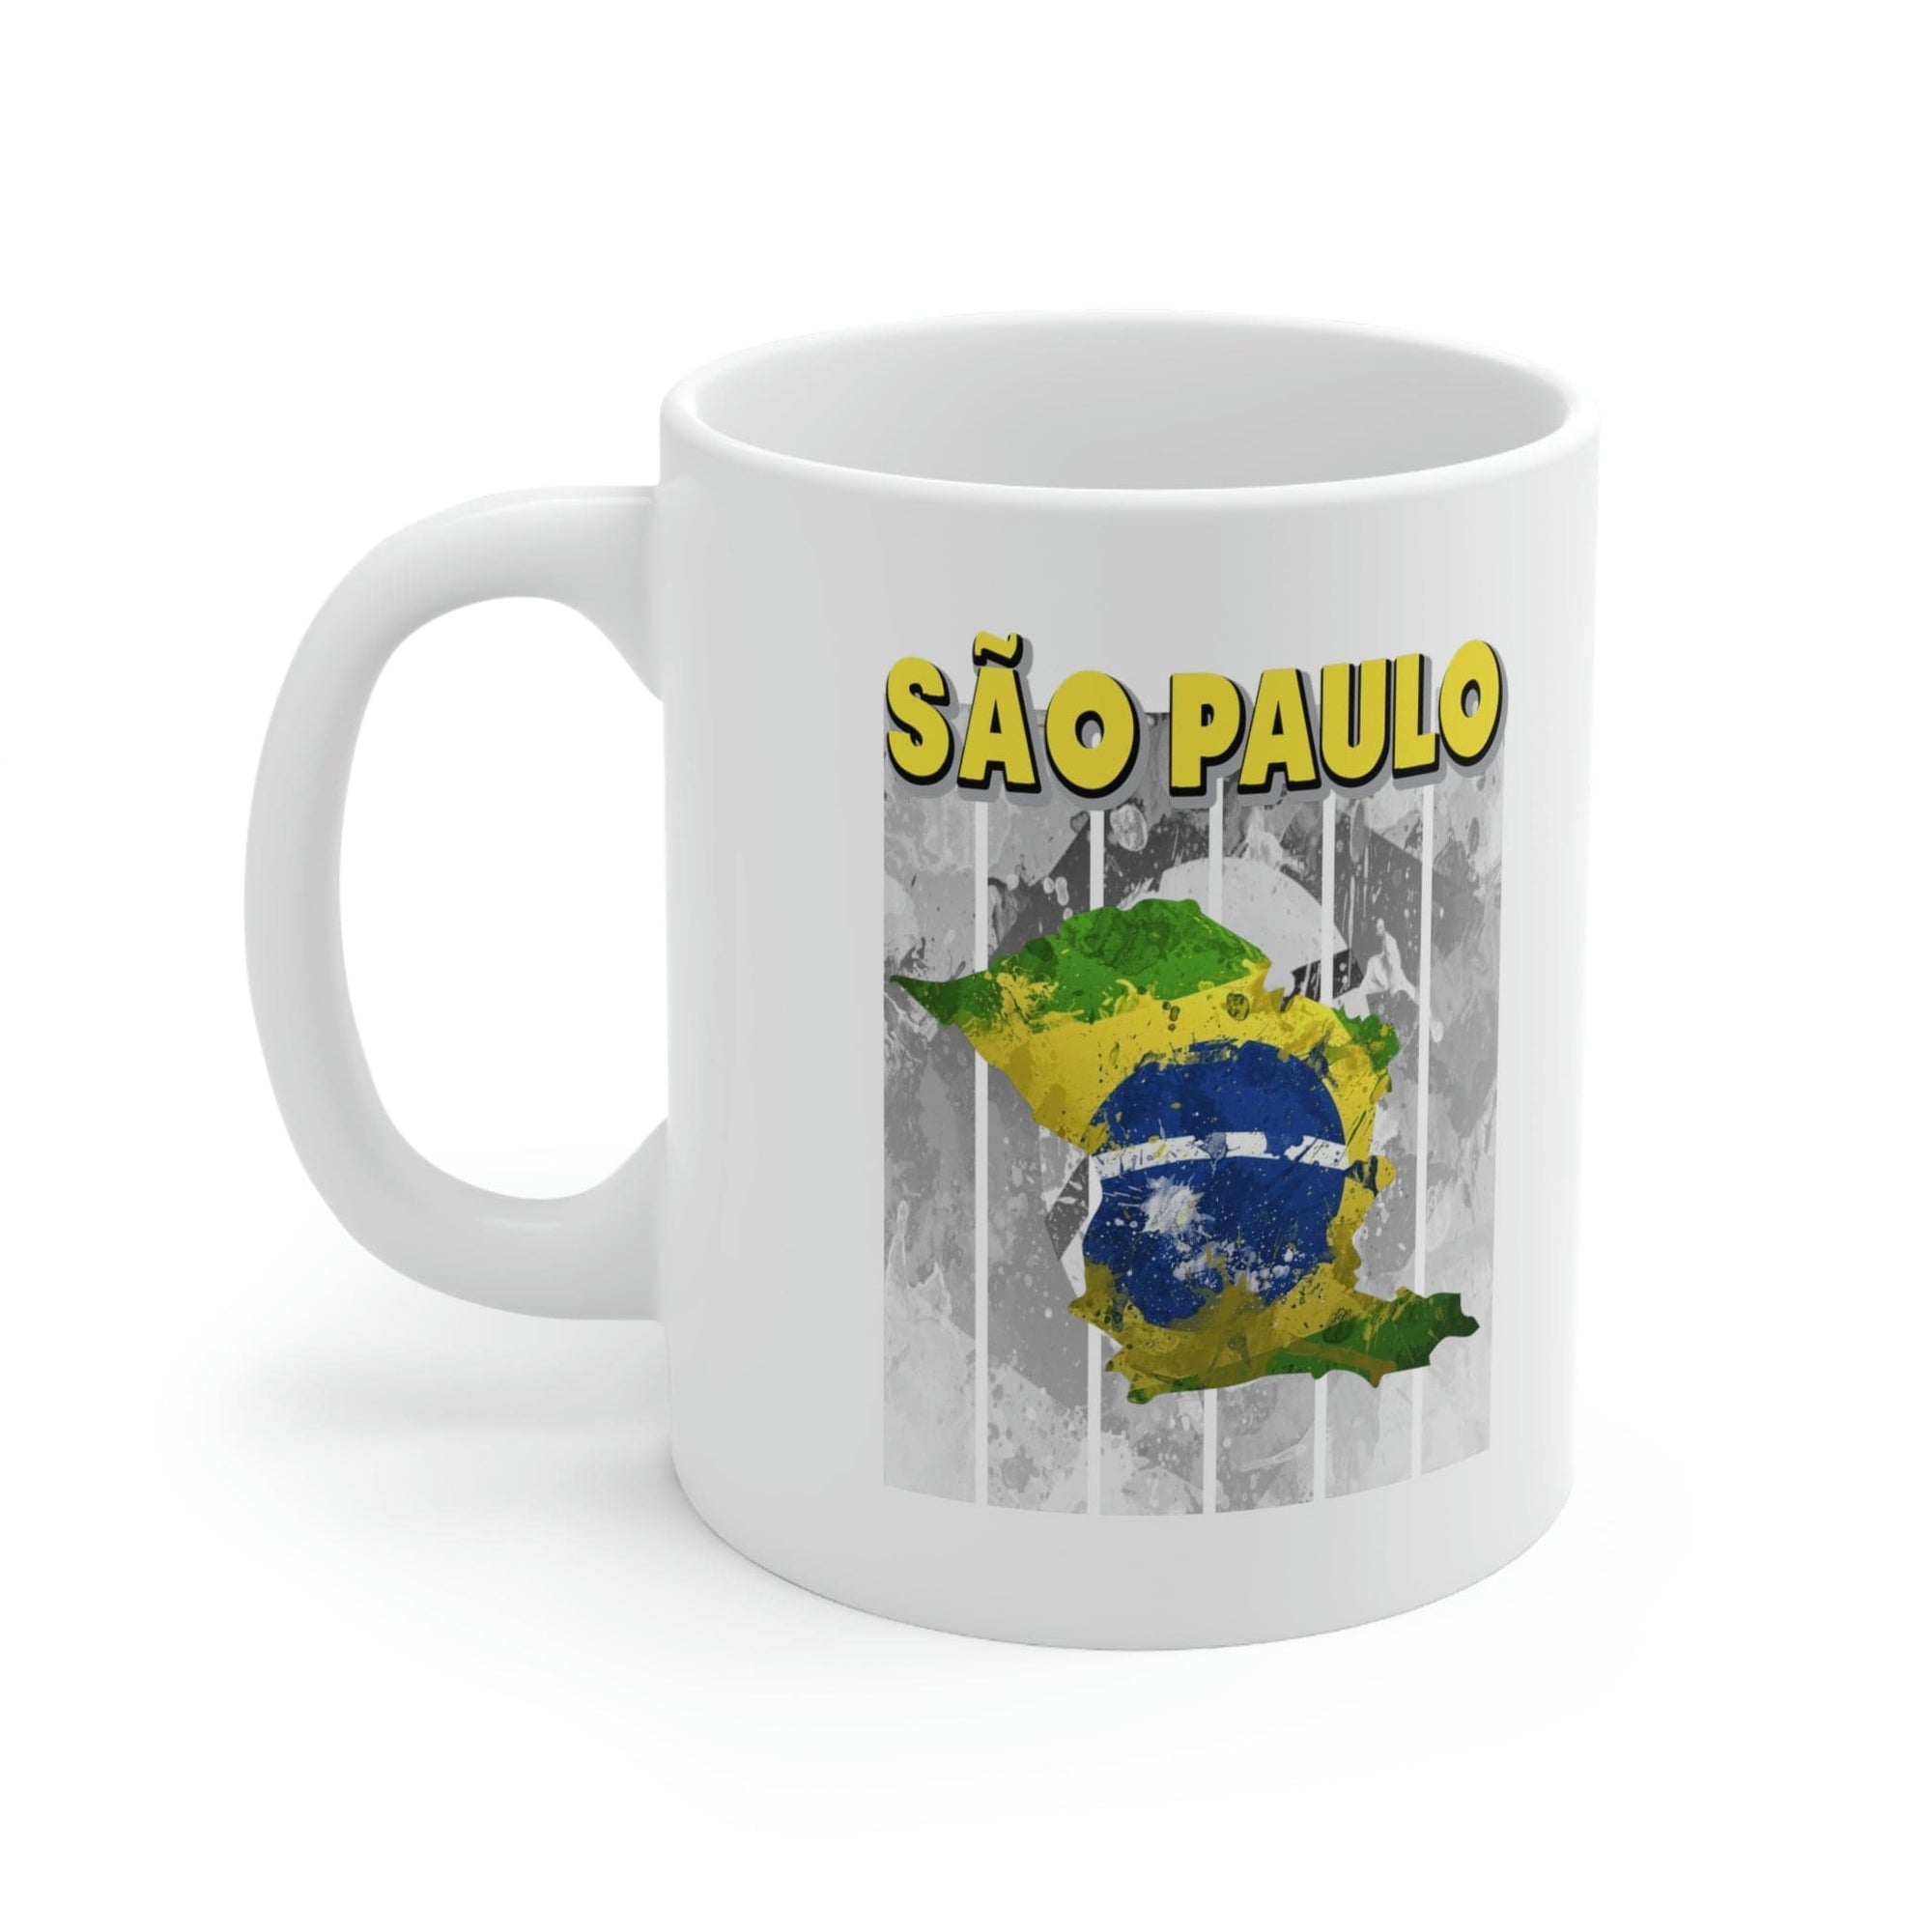 SAO PAULO - Awesome Ceramic Mug, Exclusive Design